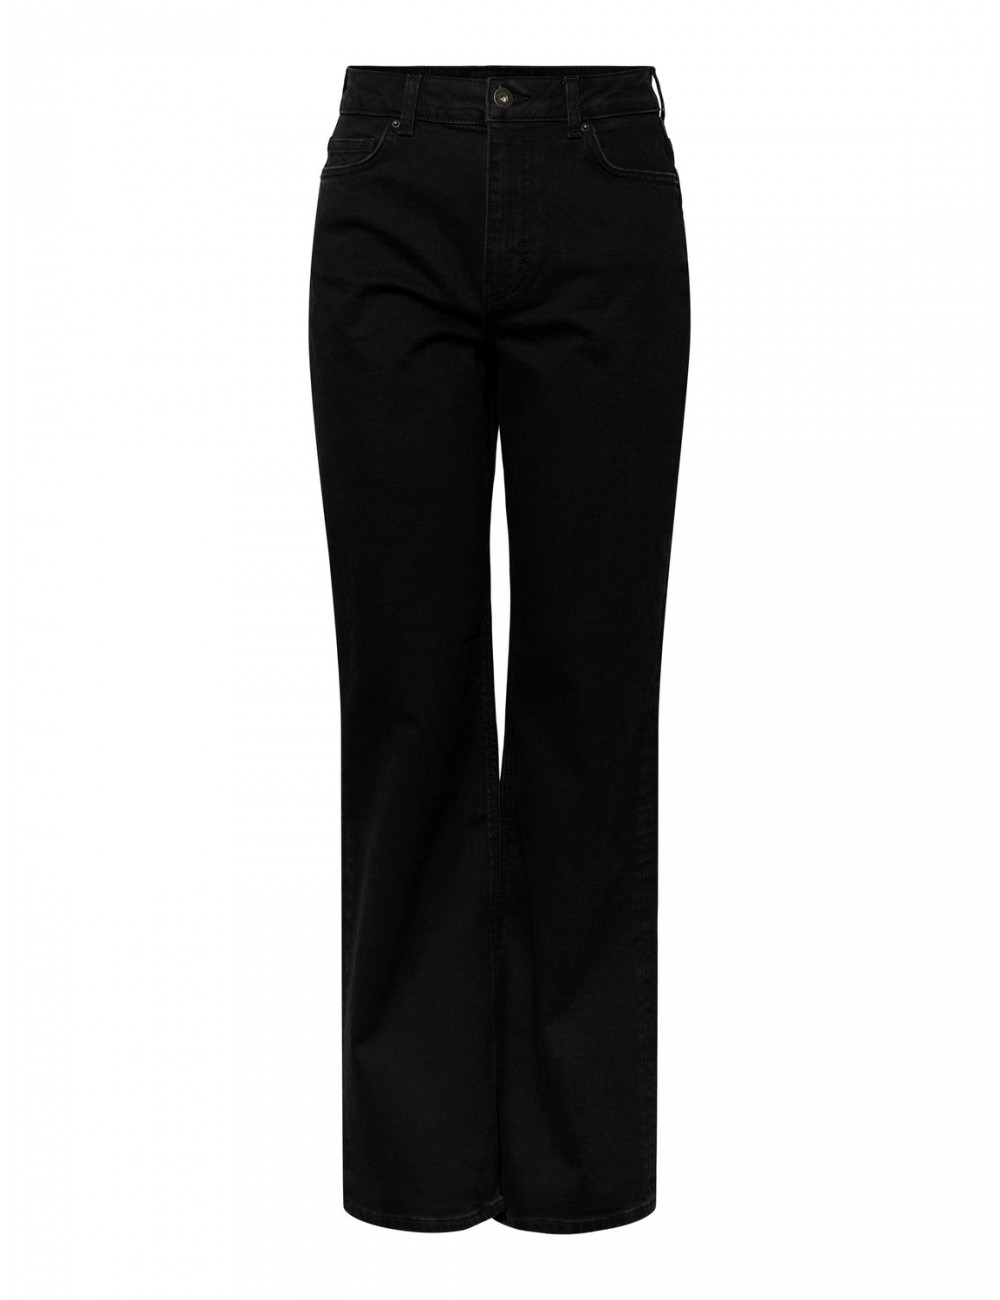 Pantalón Jeans Cholly en color negro lavado de pata ancha. Marca Pieces.